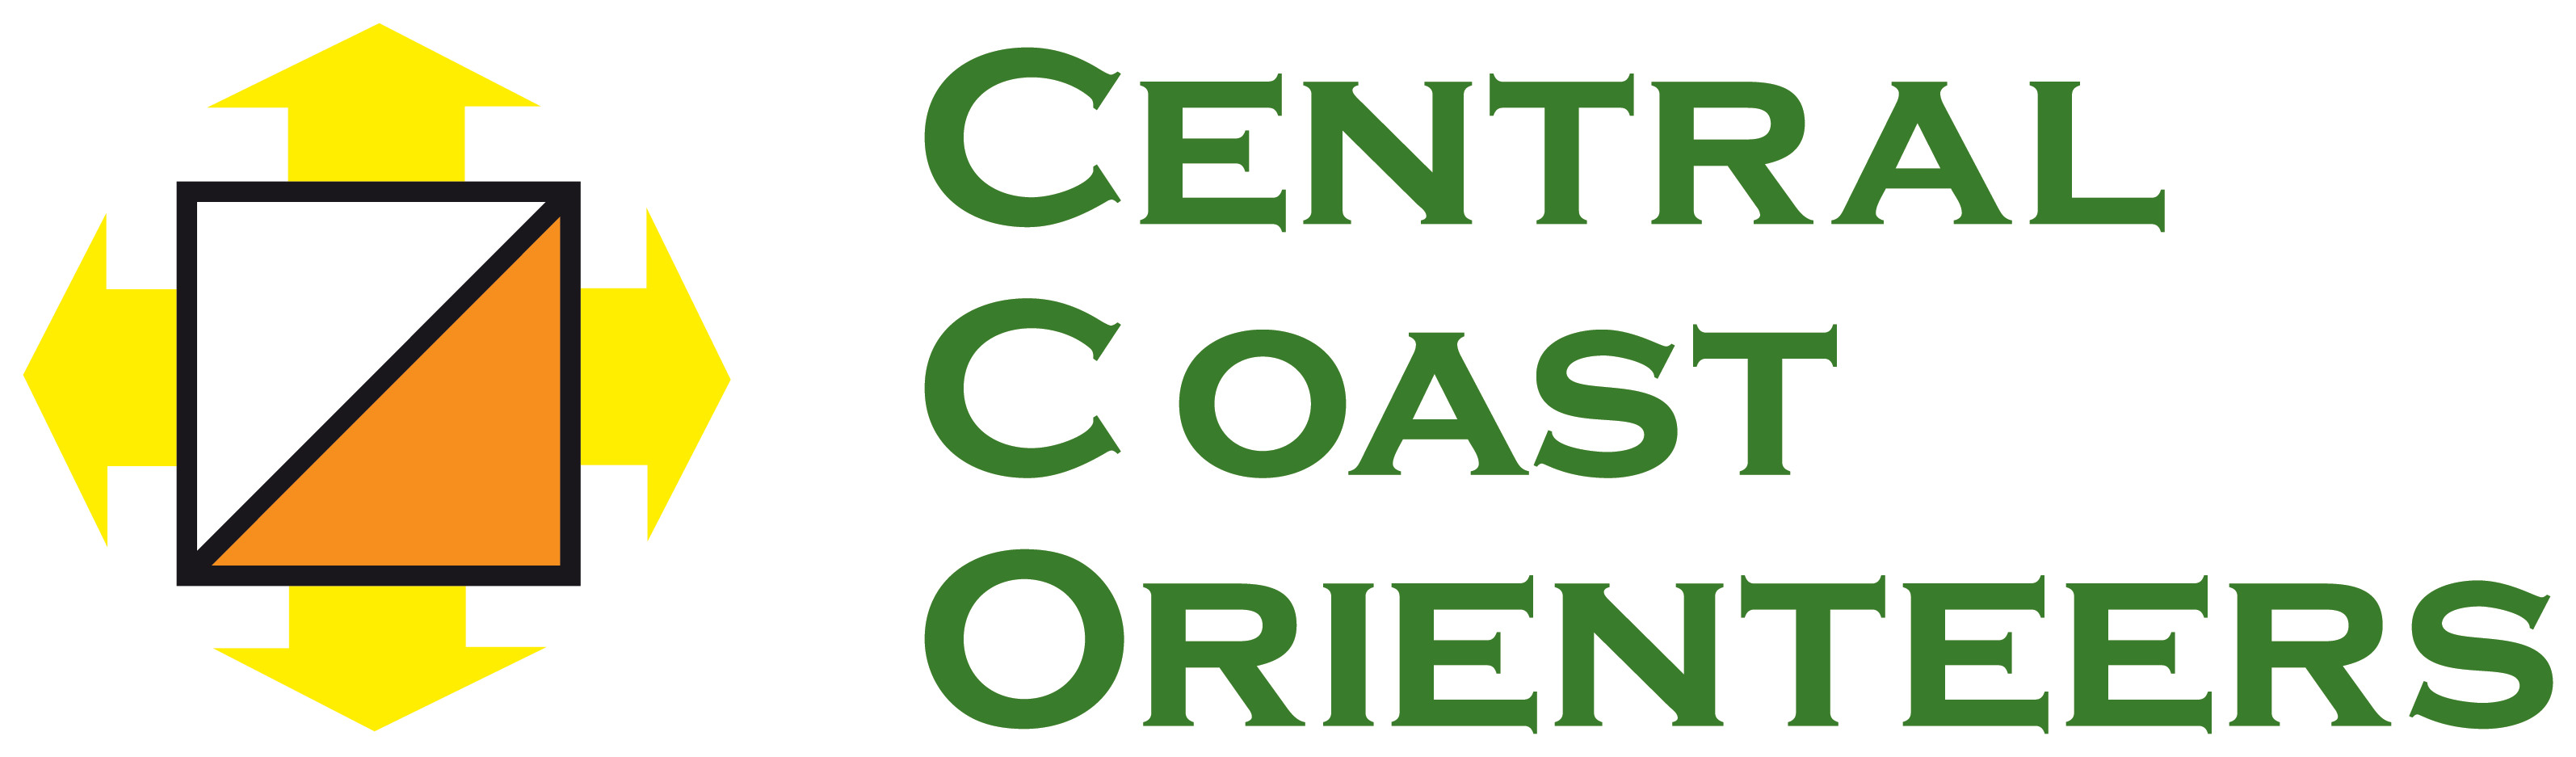 Central Coast Orienteers